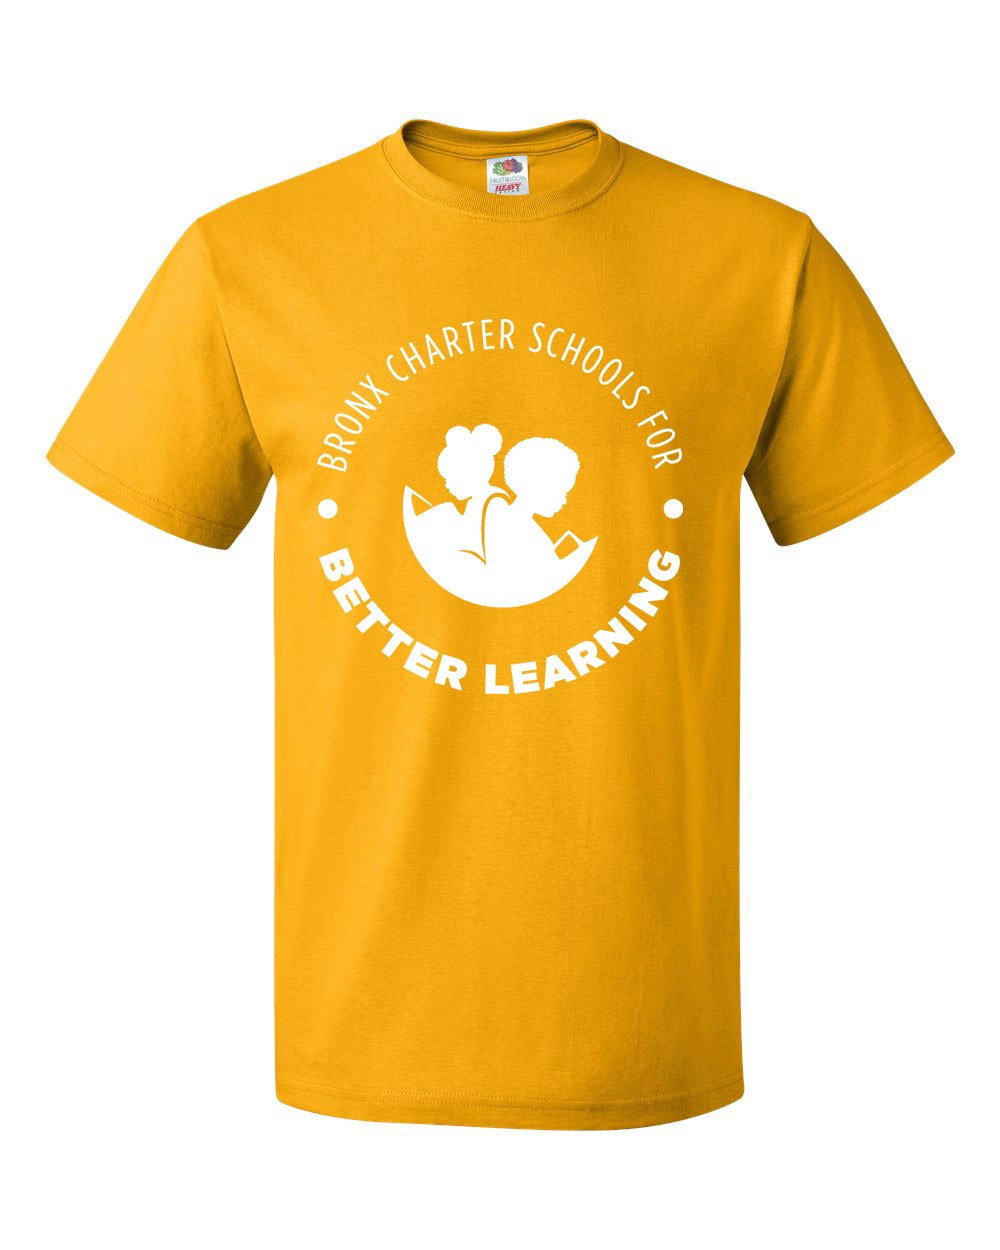 BCBL S/S Gold Gym T-Shirt w/ School Logo *Confirm Color with School